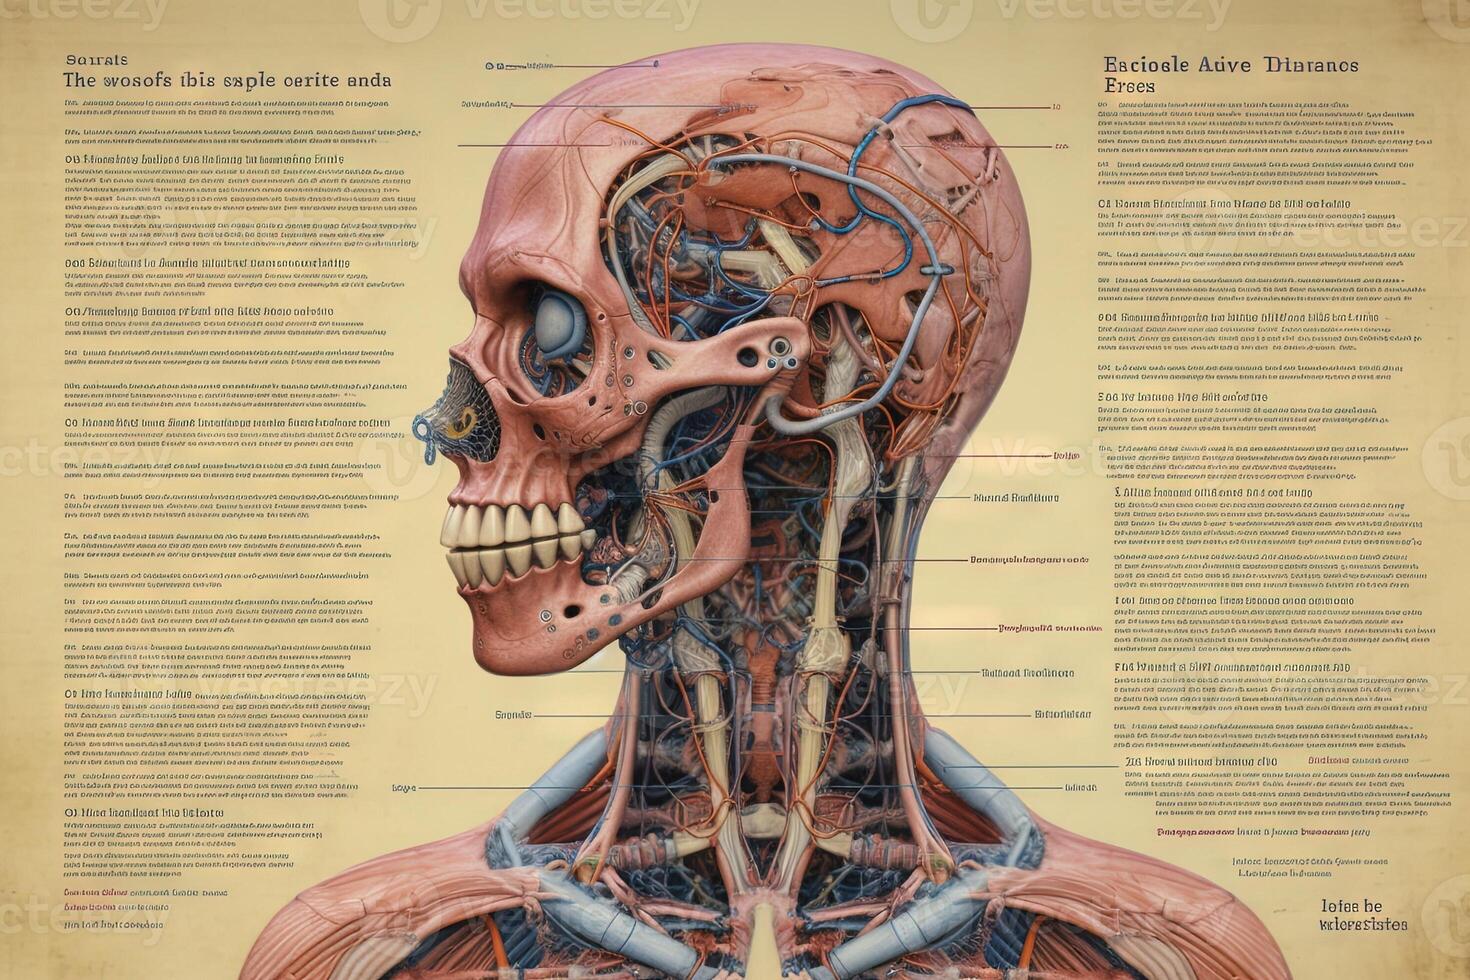 Human chamaleon cyborg animal detailed infographic, full details anatomy poster diagram illustration photo